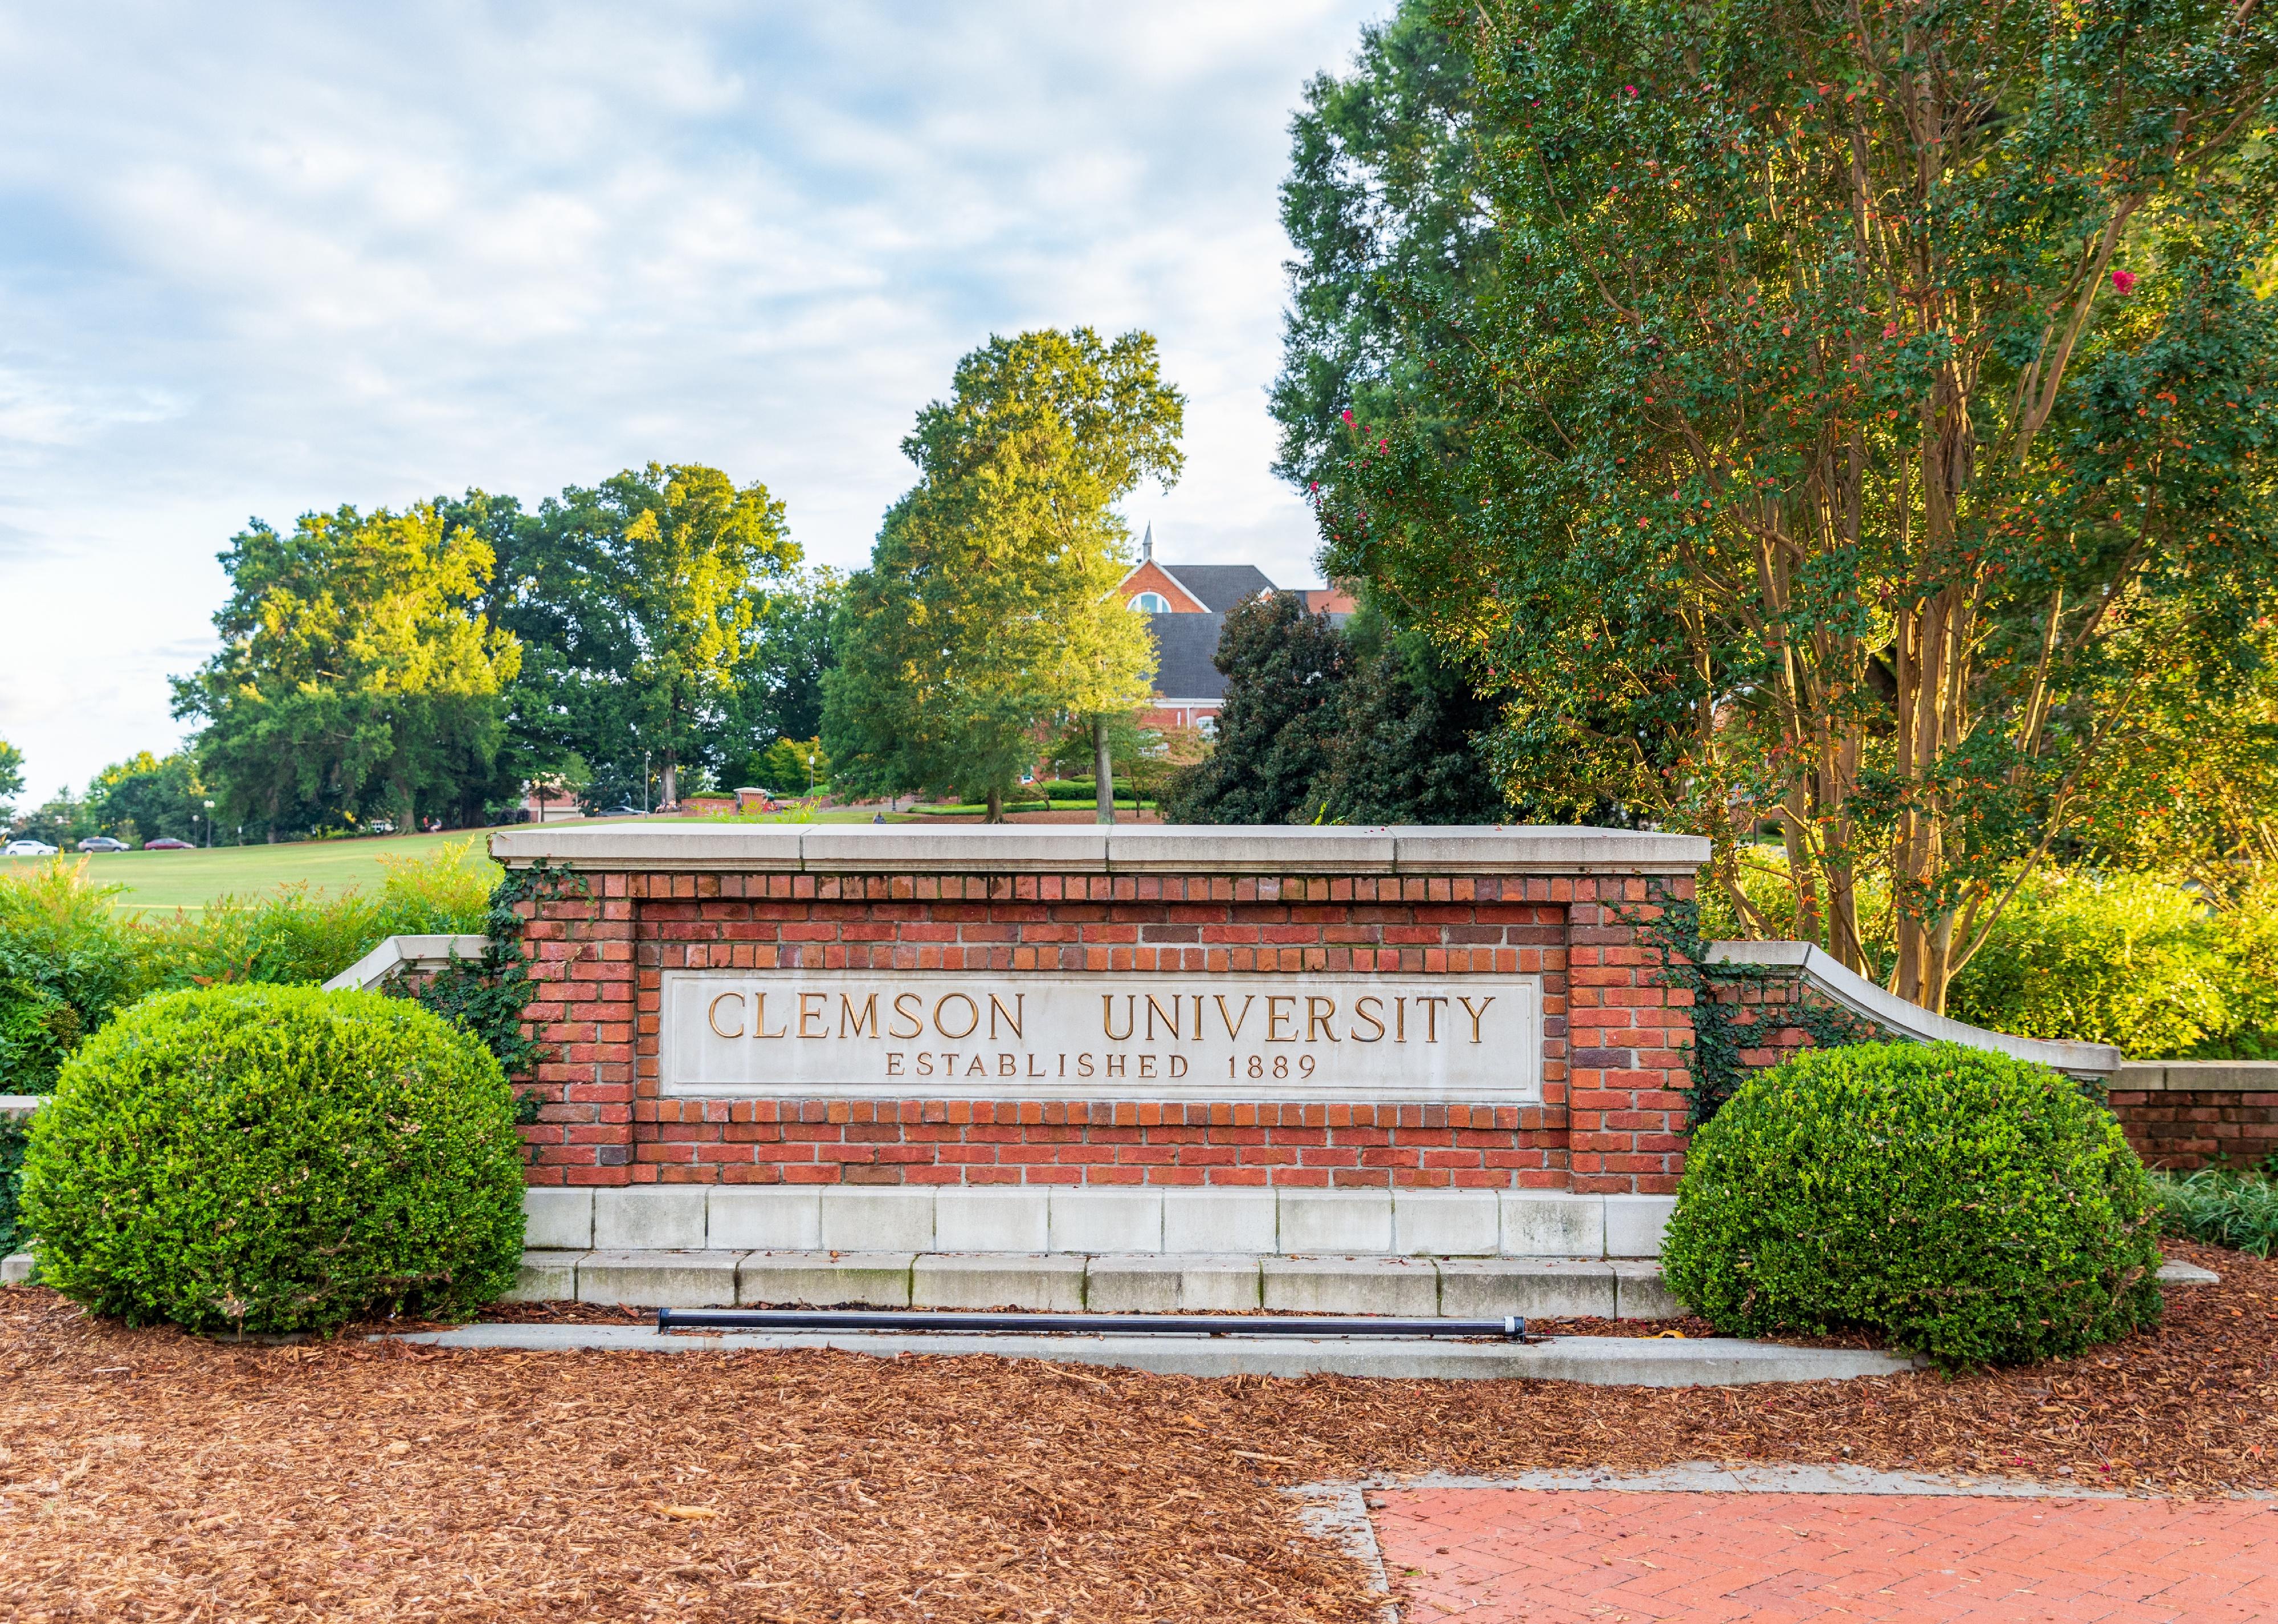 Clemson University sign.